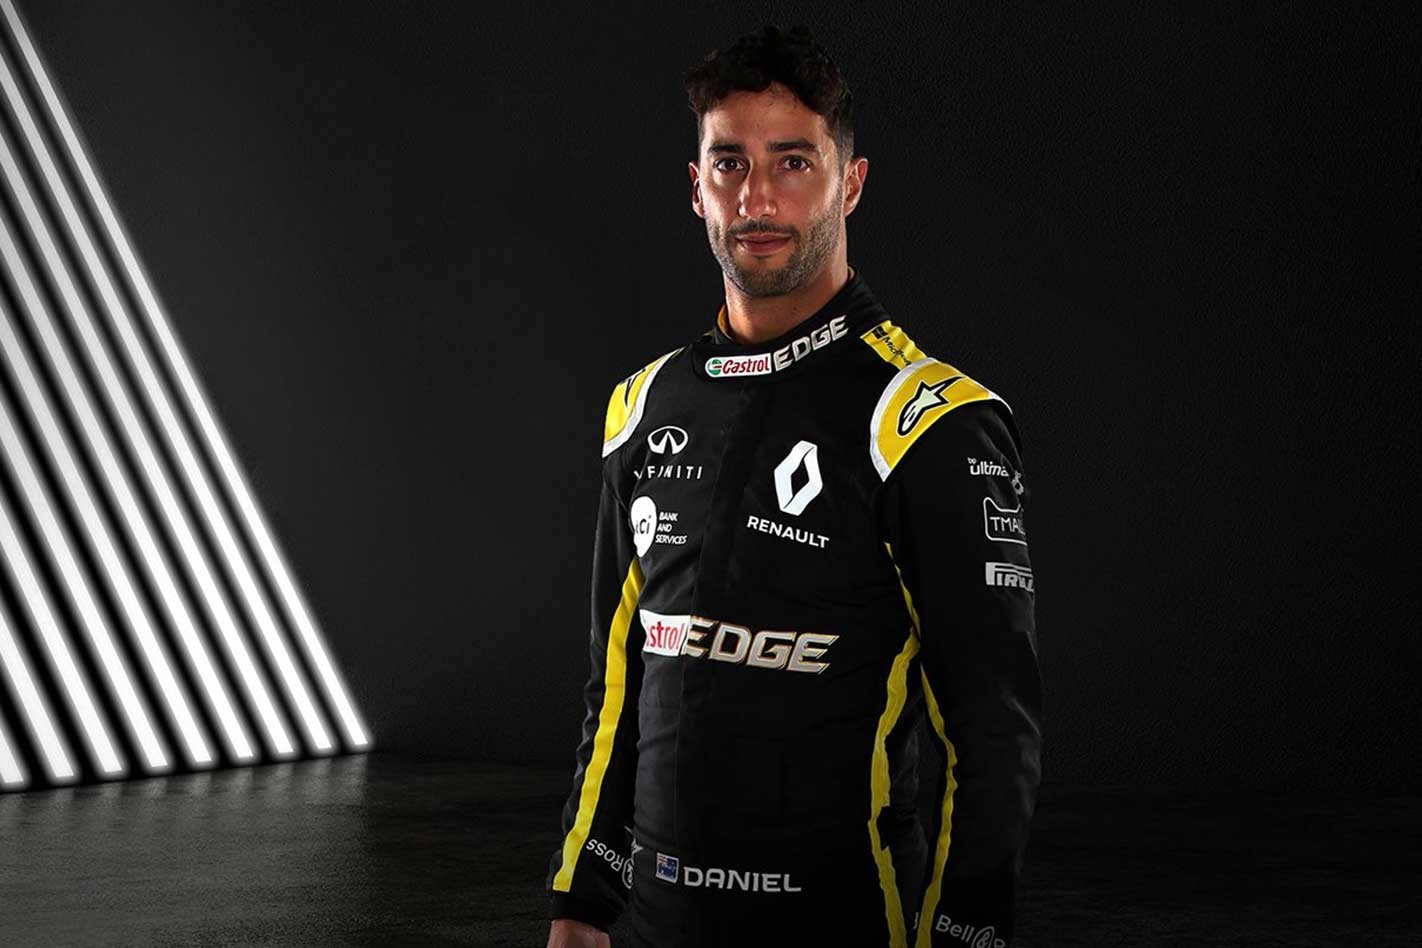 Why Daniel Ricciardo won’t win the 2019 Australian GP